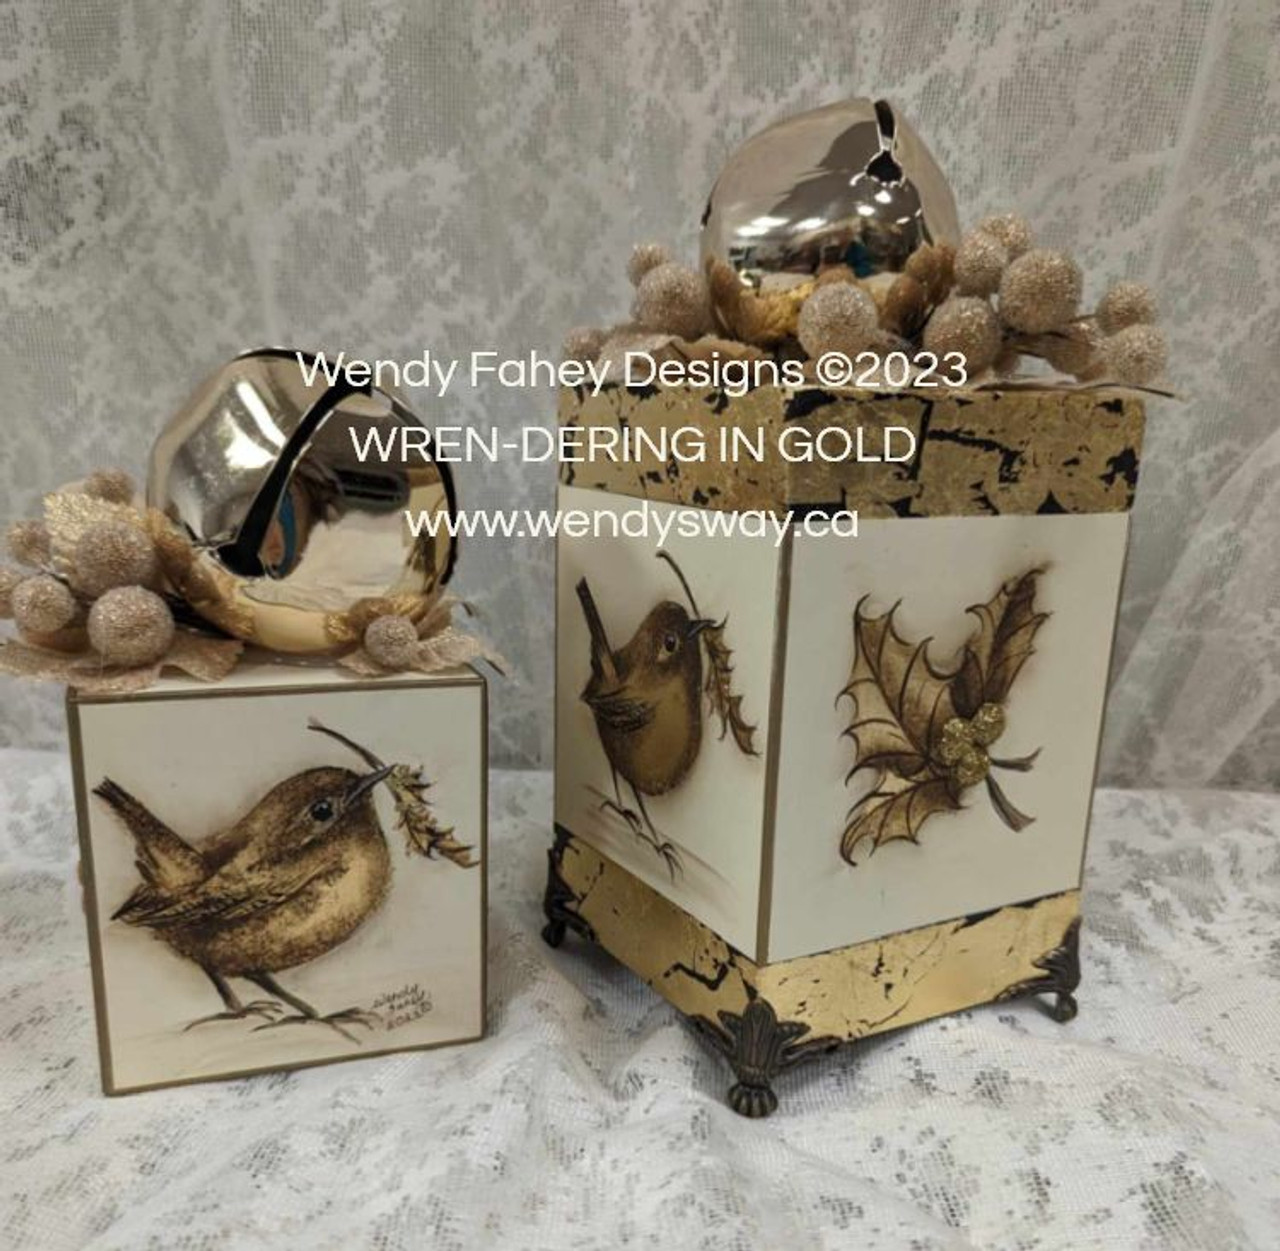 Wren-dering in Gold - E-Packet - Wendy Fahey